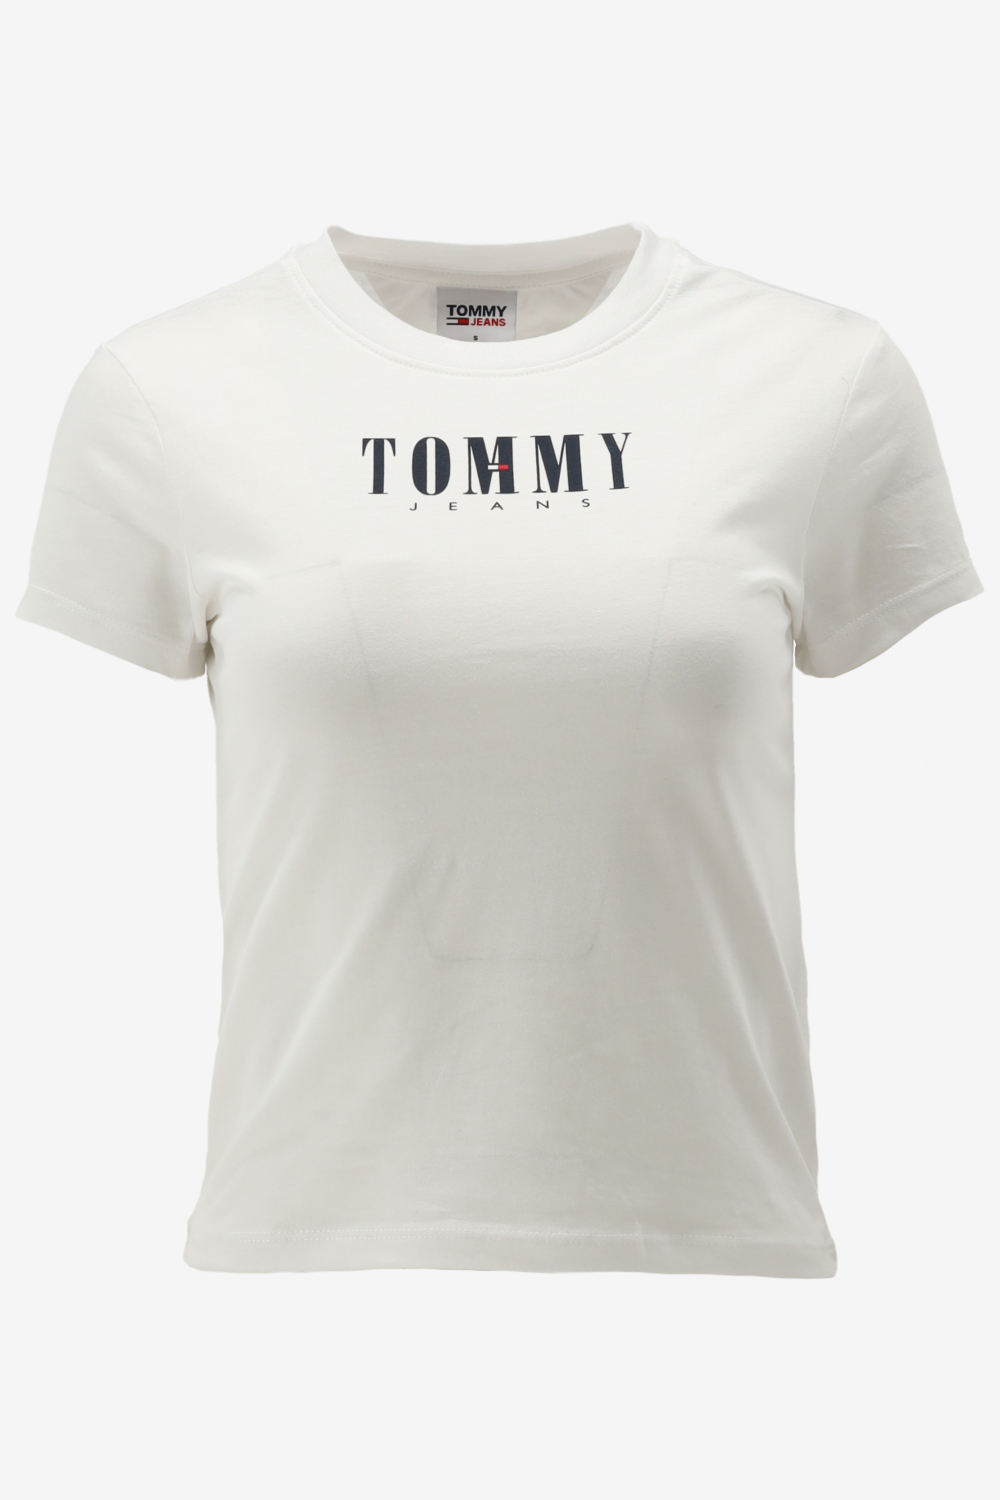 Tommy hilfiger t-shirt maat XL